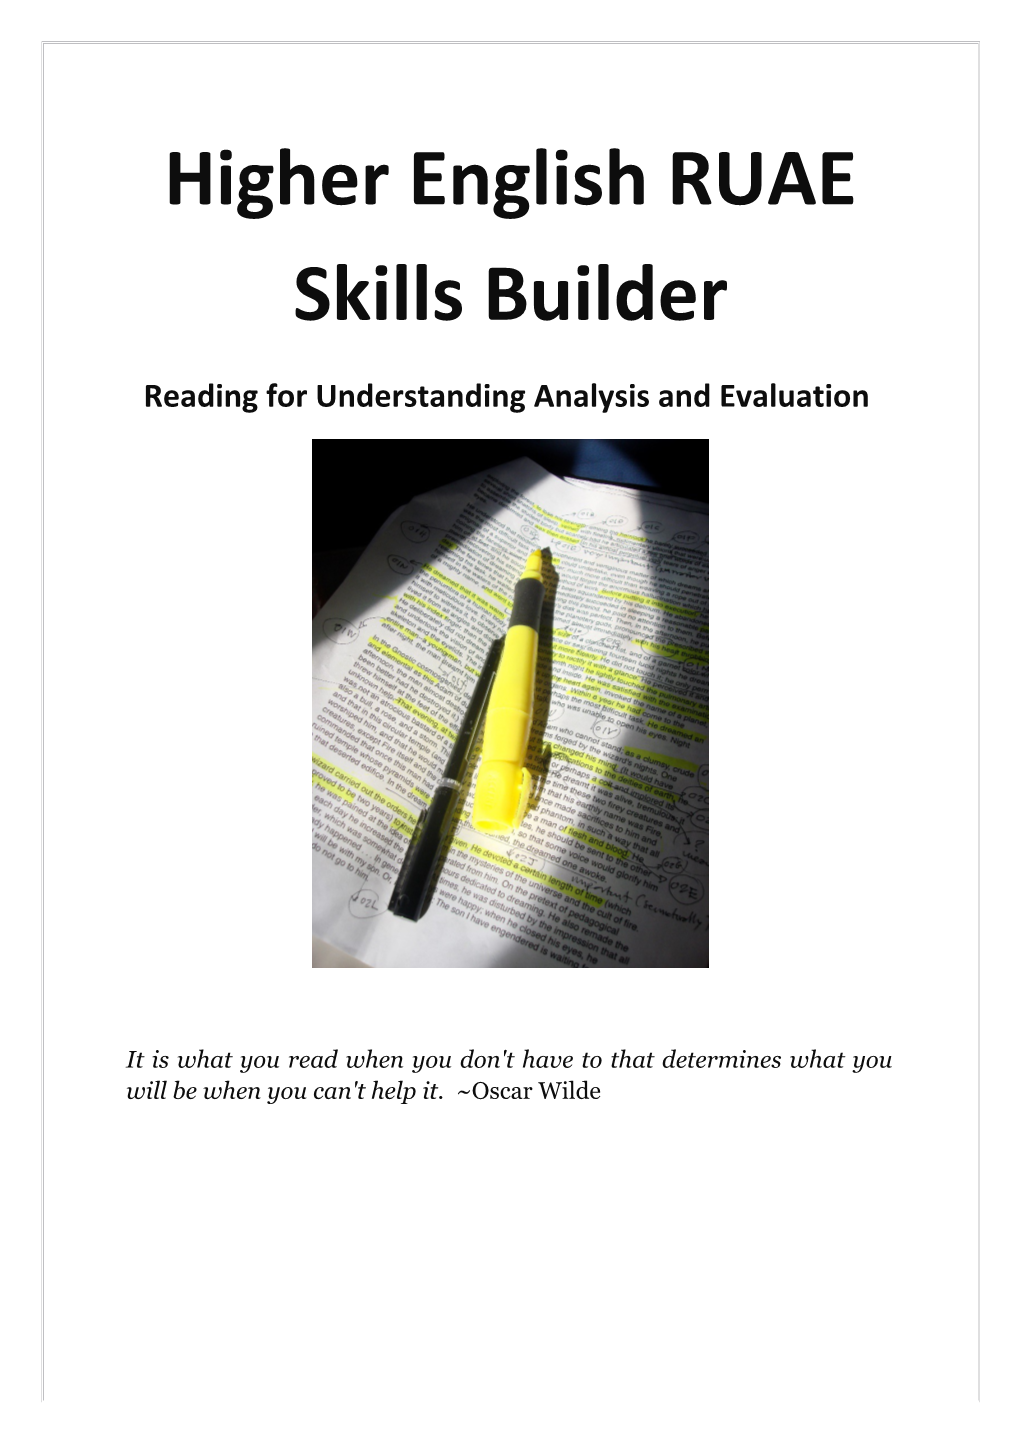 Higher English RUAE Skills Builder